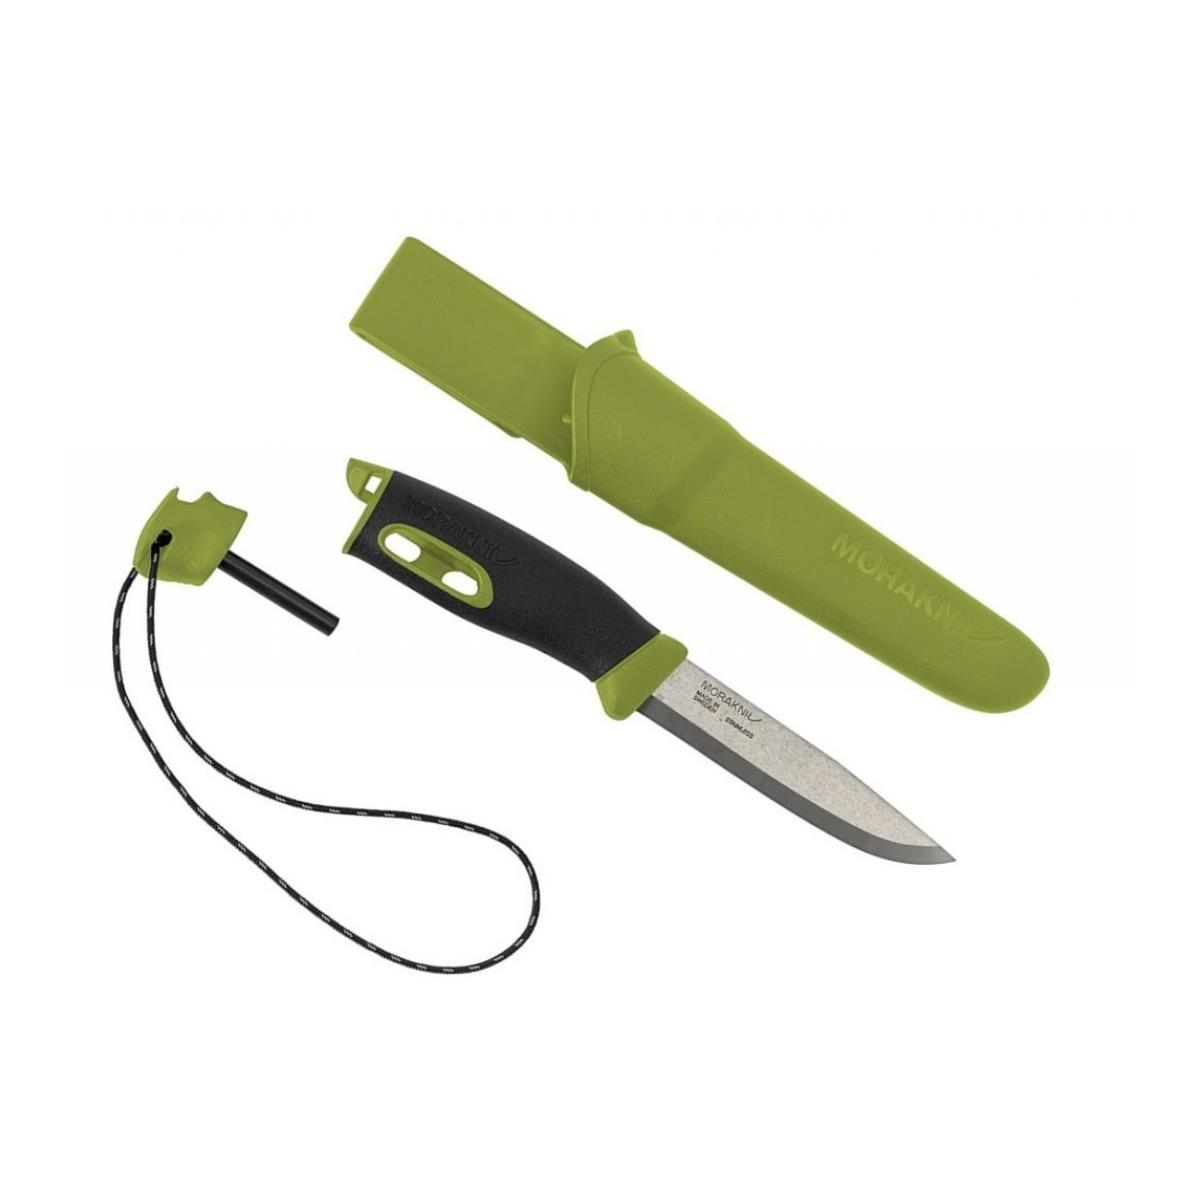 Нож Companion Spark Green (13570) Morakniv нож для шашлыка 30 см длина лезвия 15 см армения